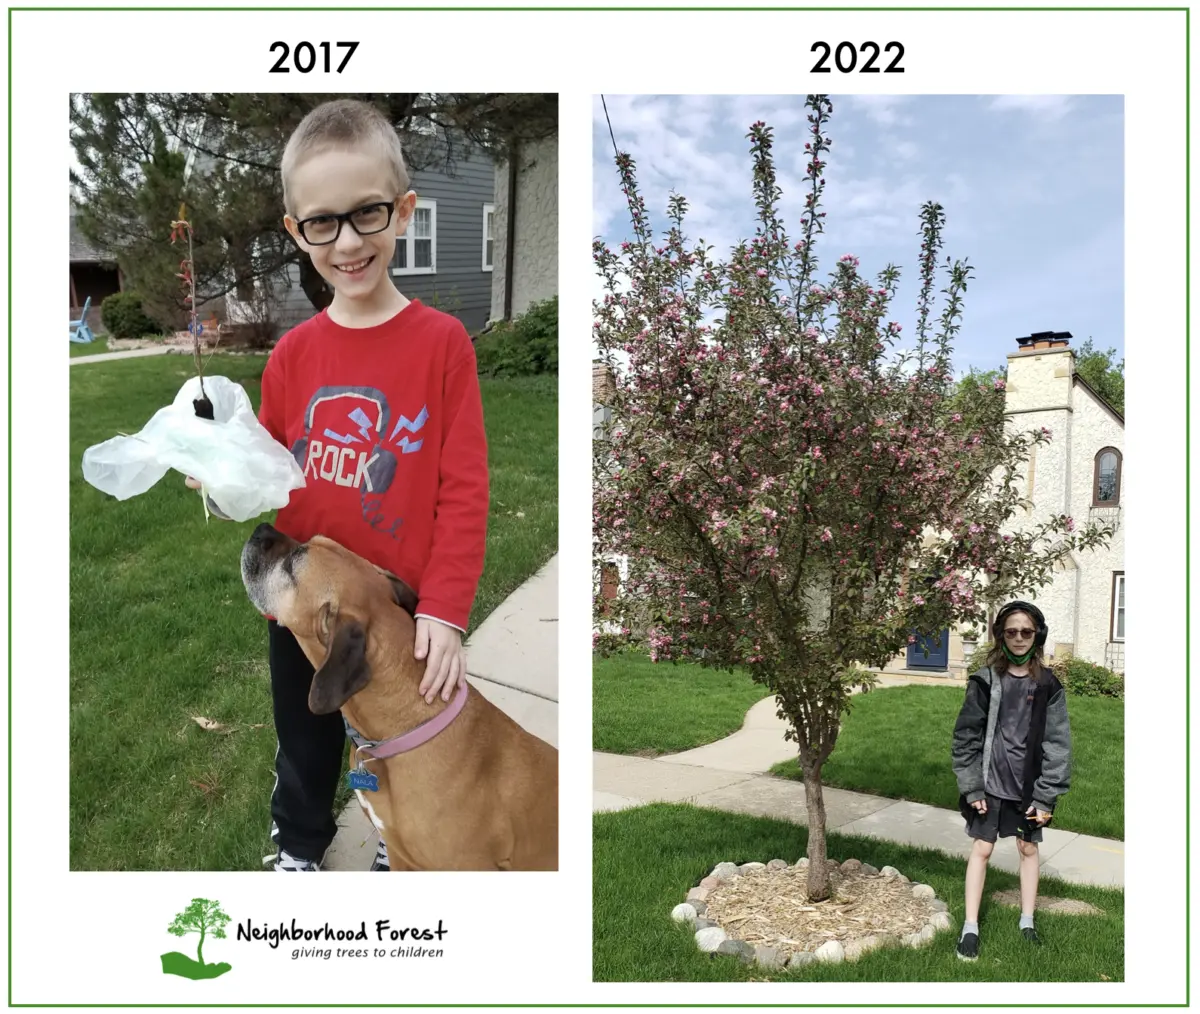 Then and Now – Judah from Edina, Minnesota